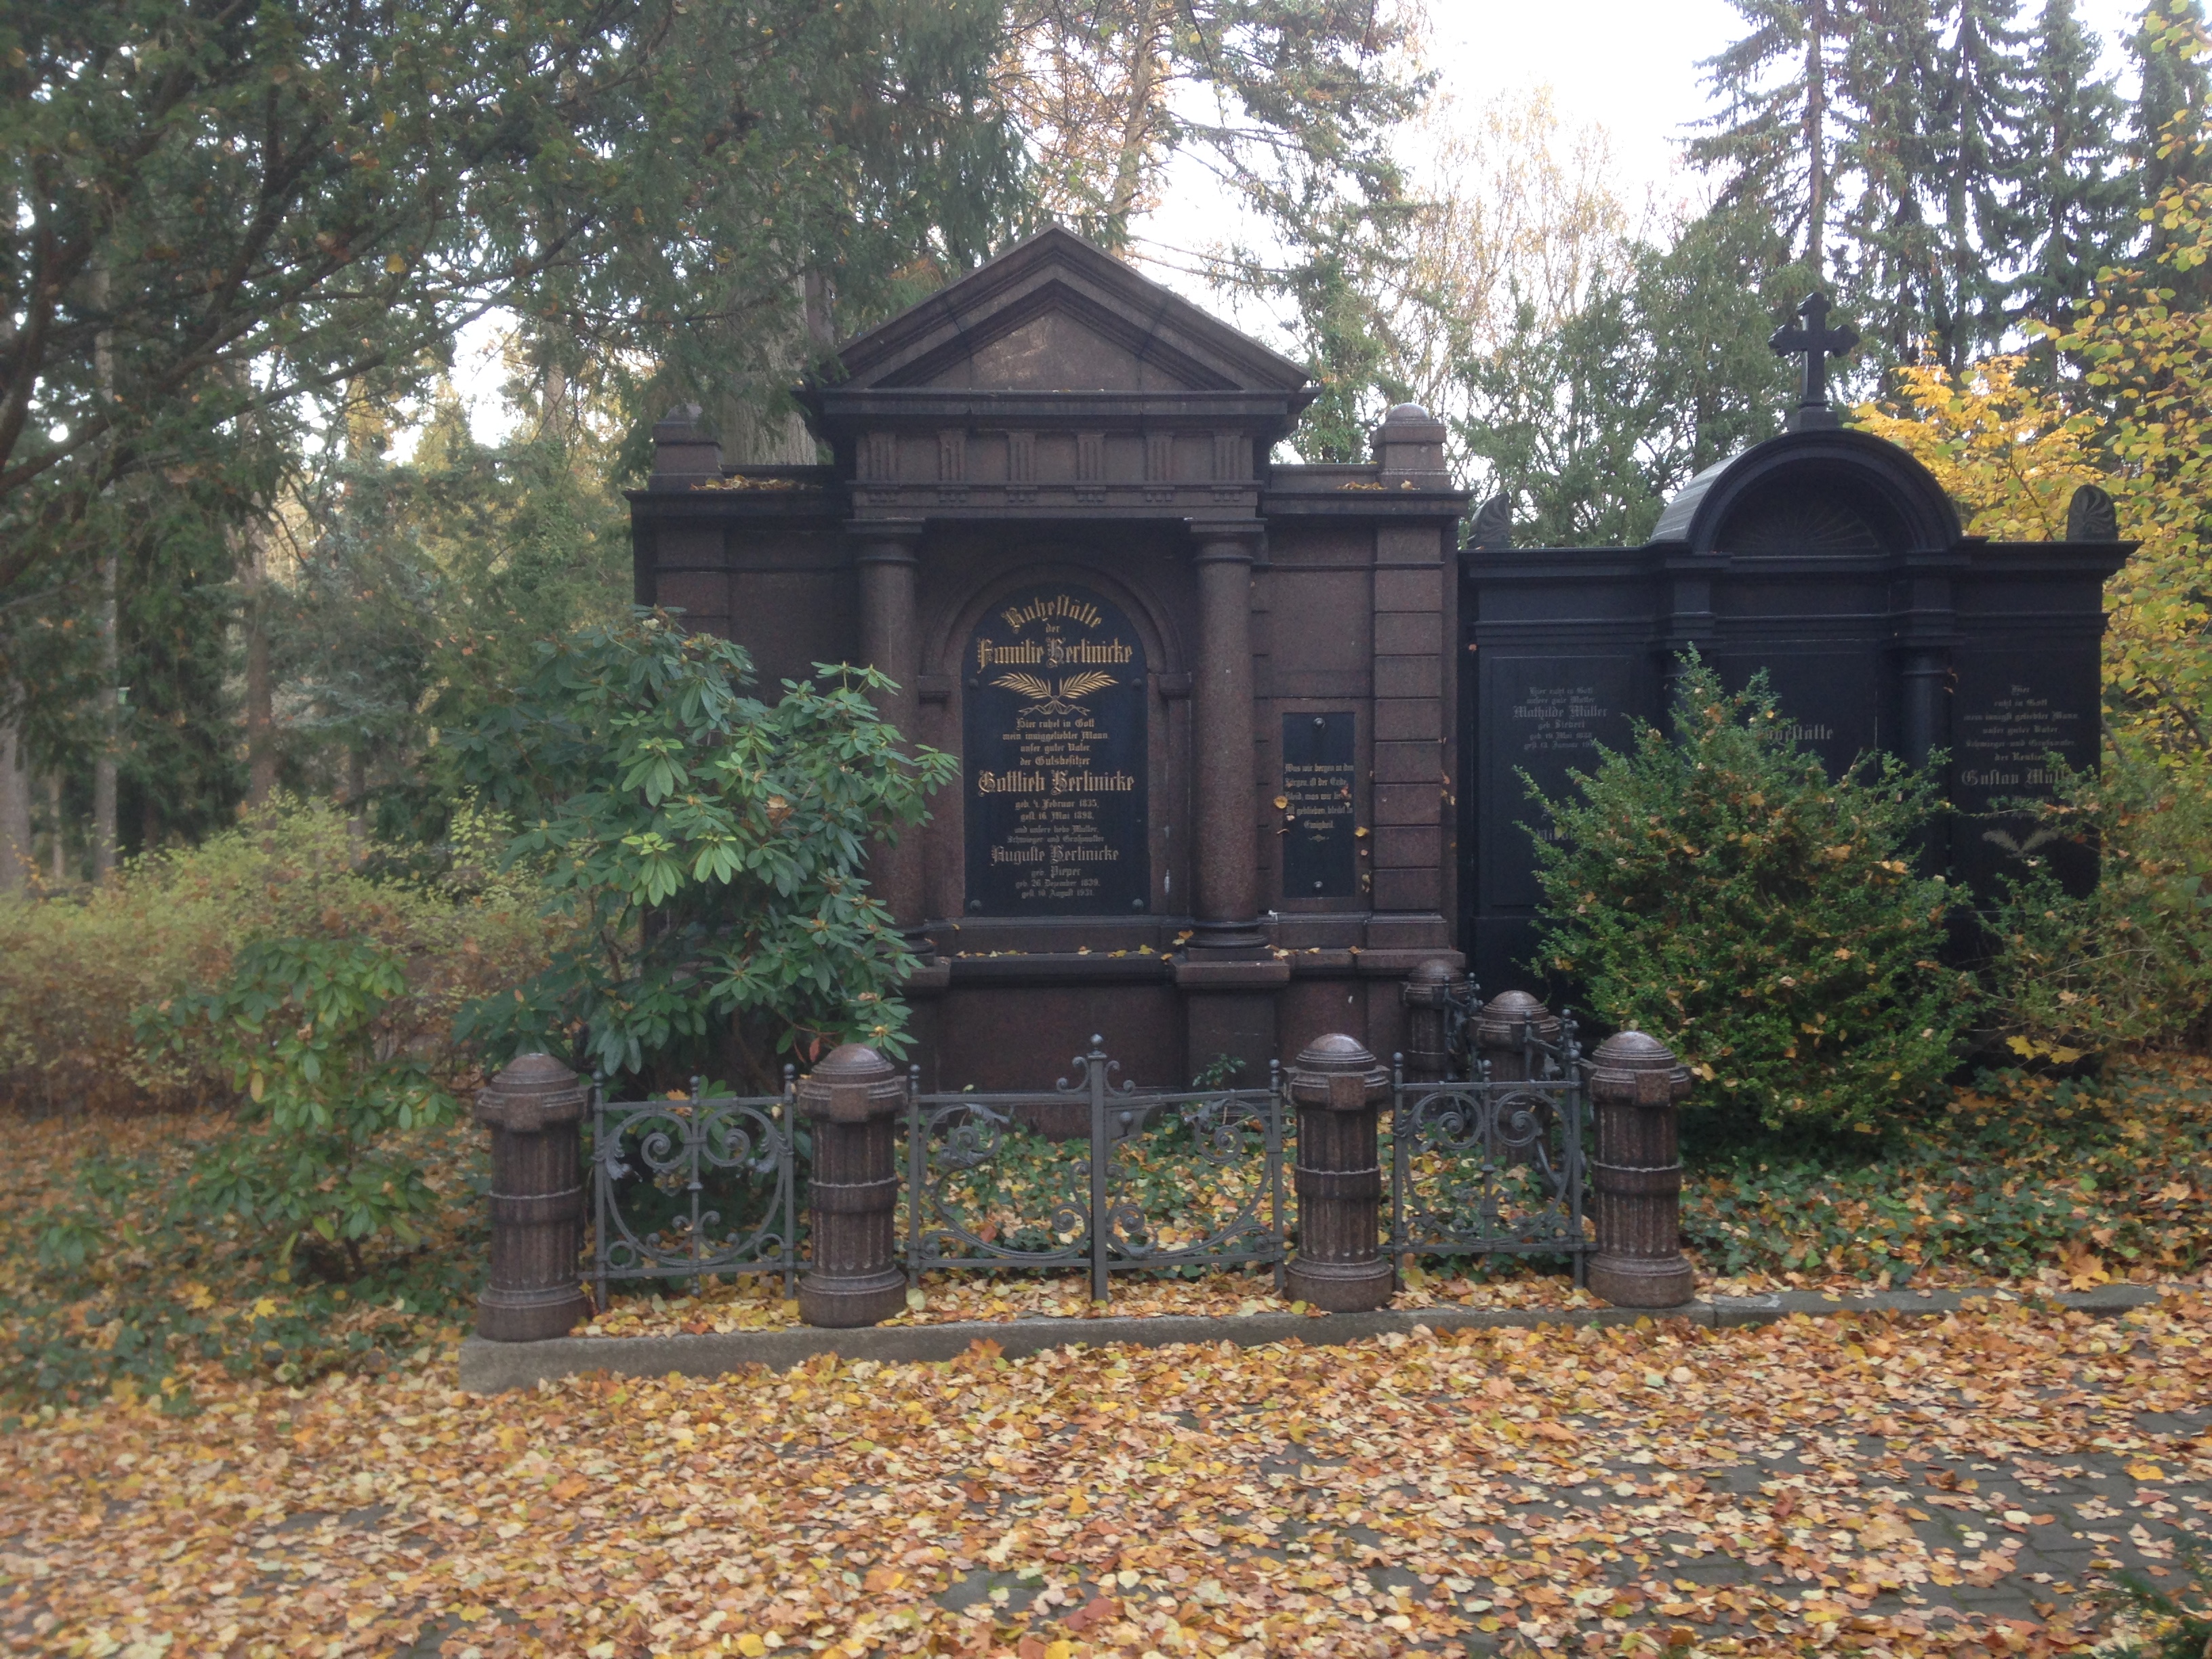 Grabstein Gottlieb Berlinicke, Friedhof Steglitz, Berlin